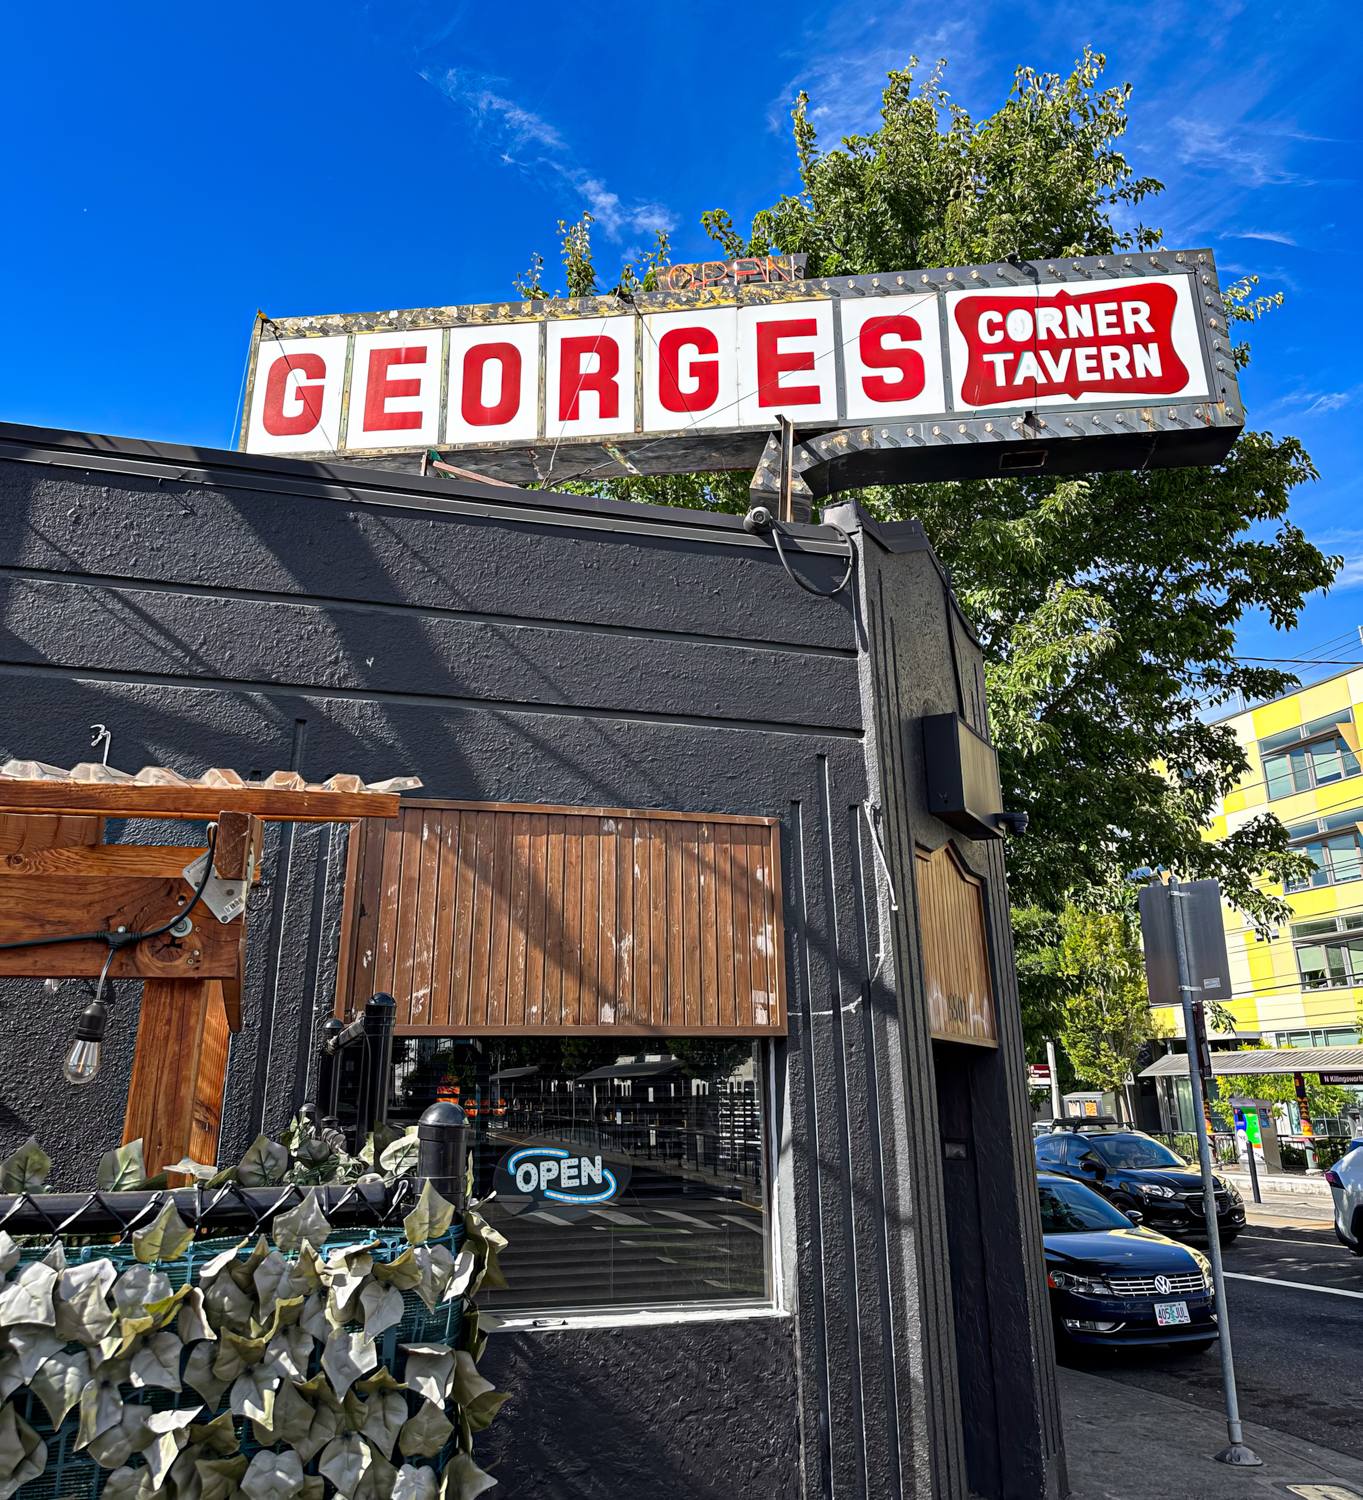 George’s Corner Tavern